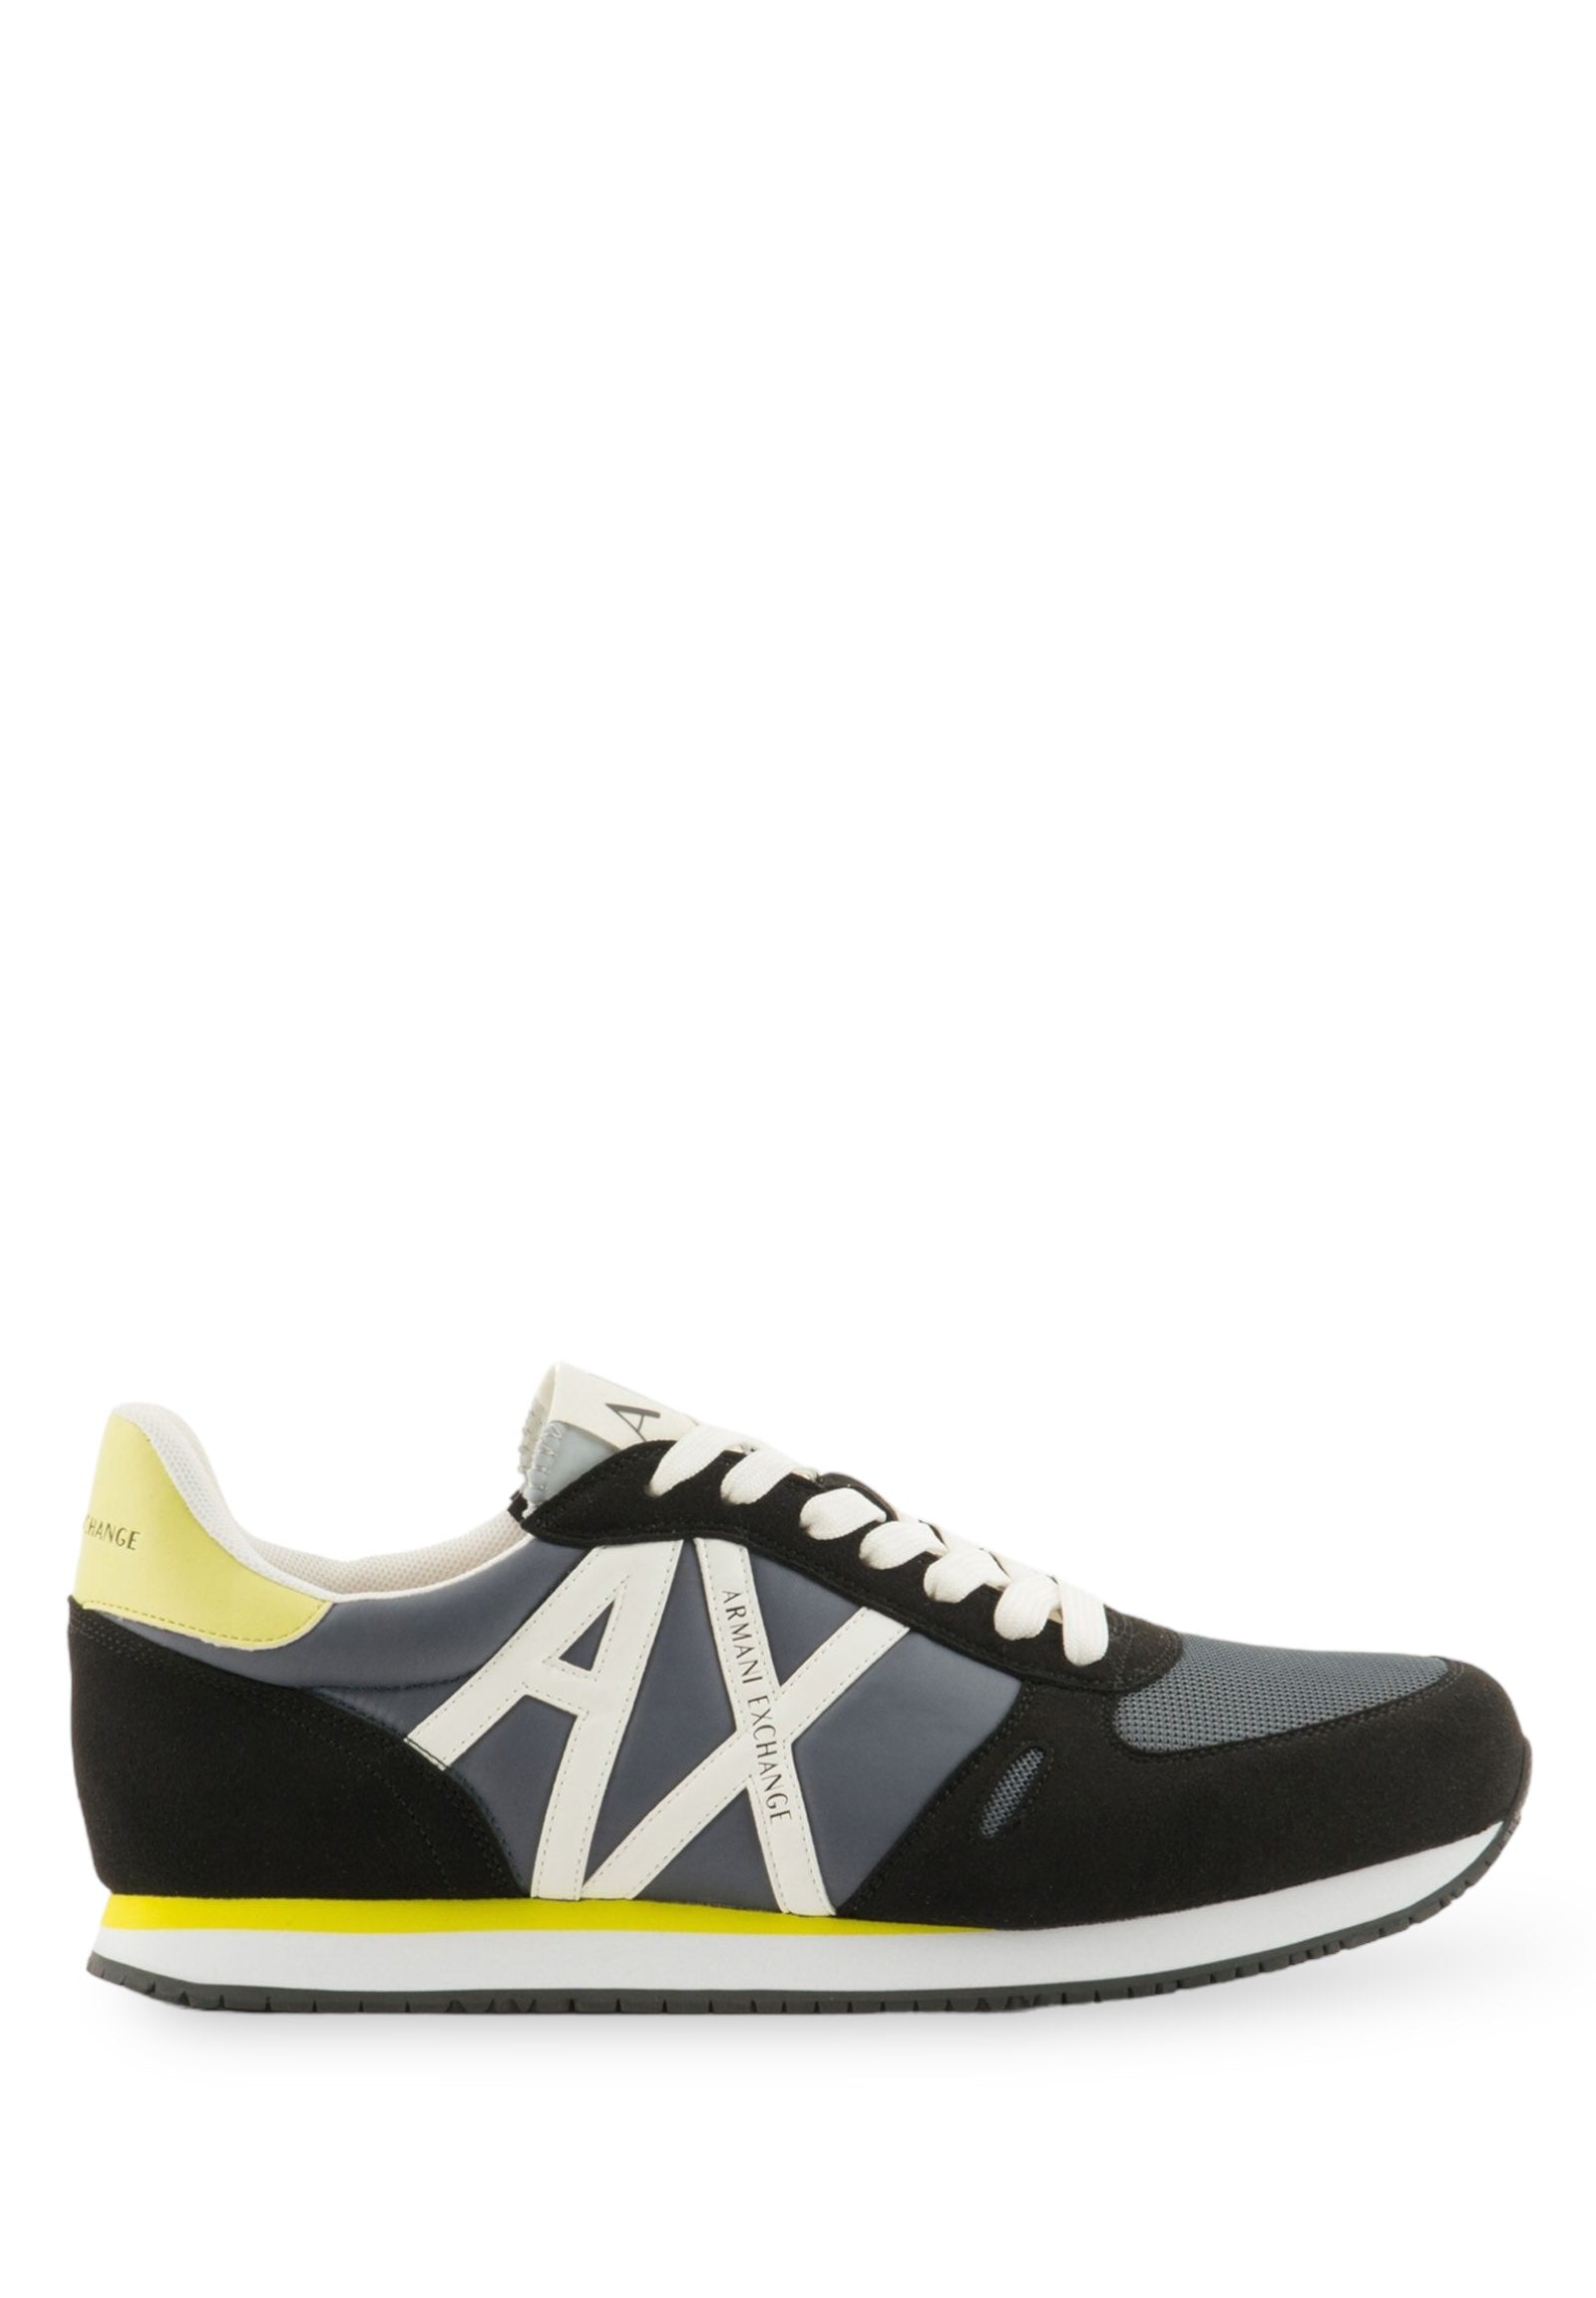 Sneakers Xux017 Black, Grey, Yellow